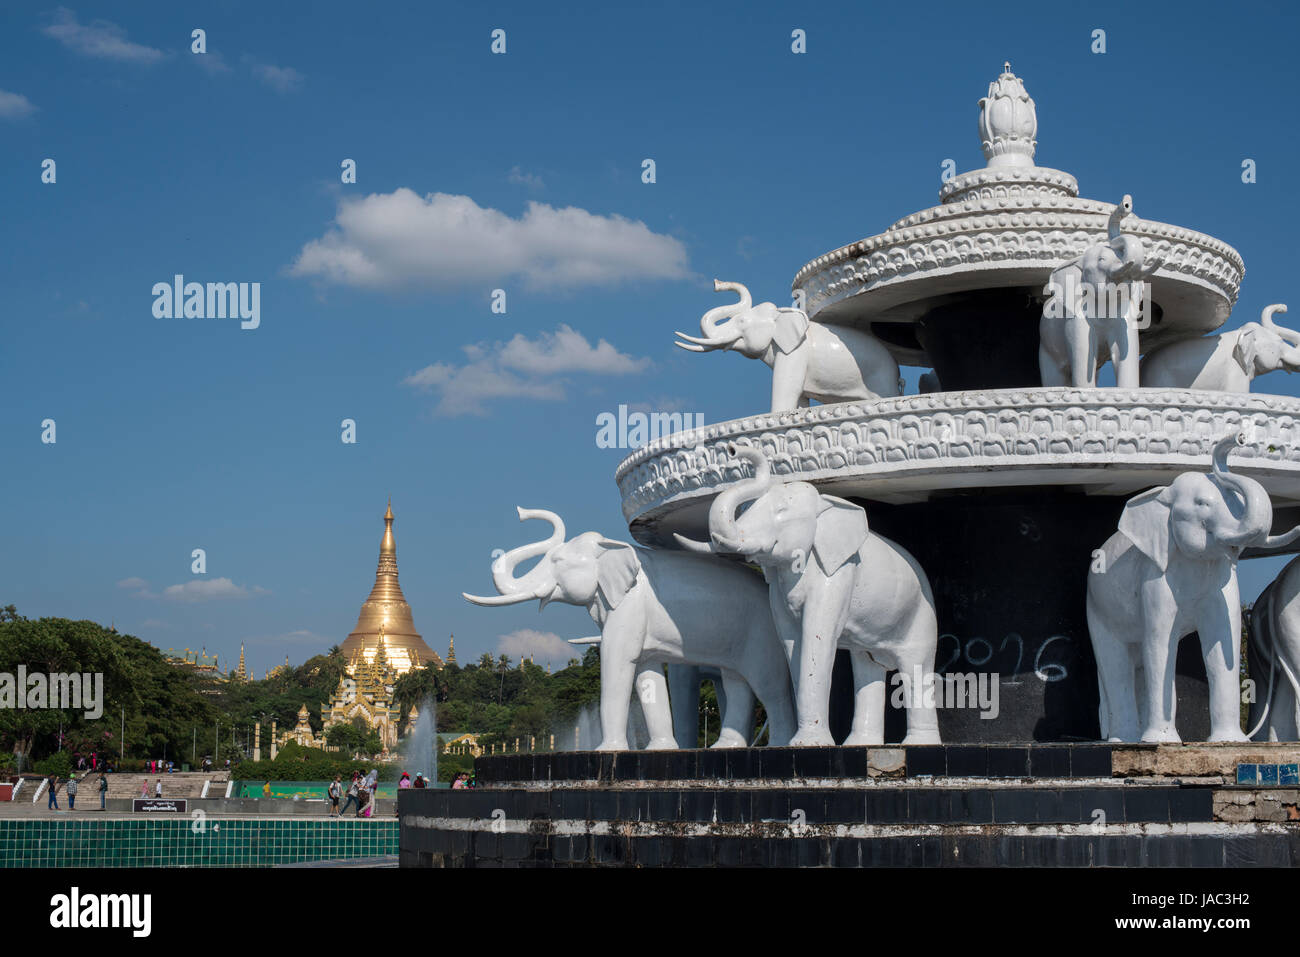 An ornament of elephants stands in the pathway leading to the Shwedagon Pagoda in Yangon (Rangoon), Myanmar (Burma) Stock Photo